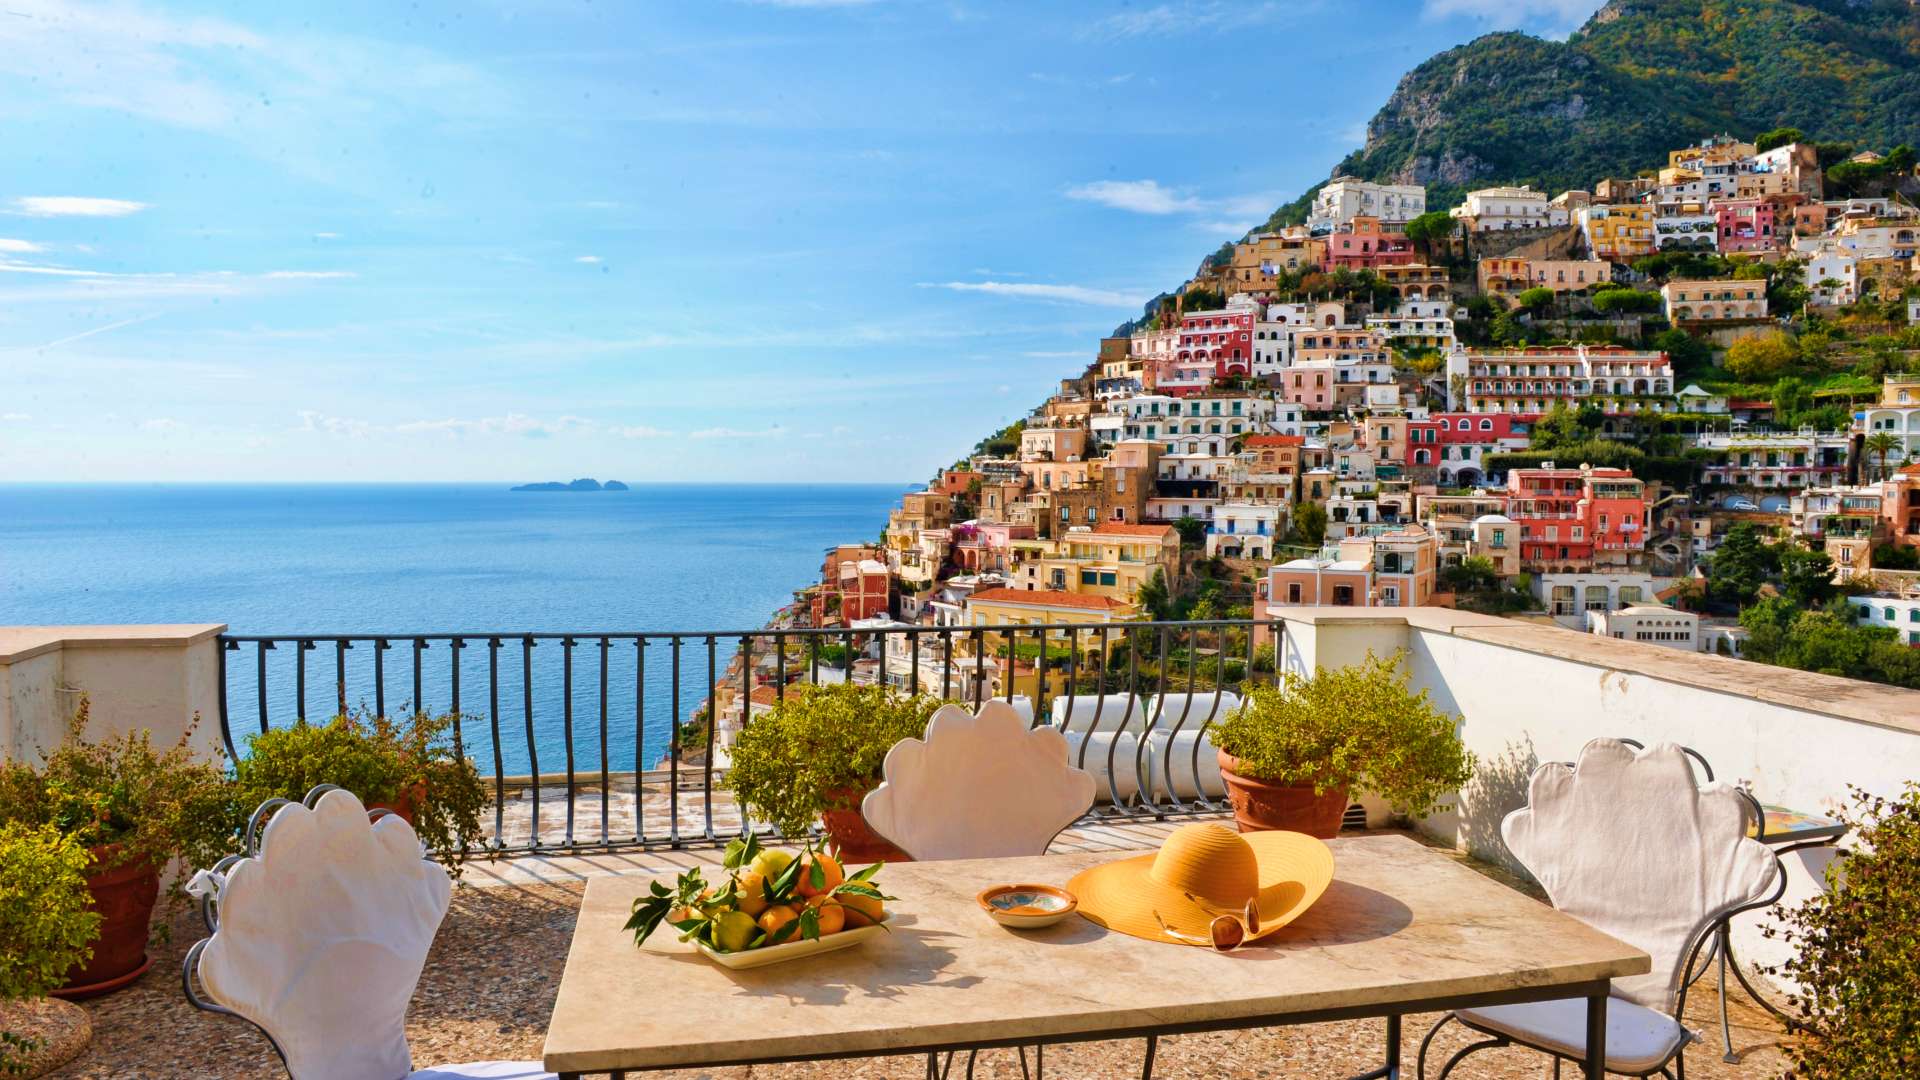 Elegant Hotel in Positano on the Amalfi Coast